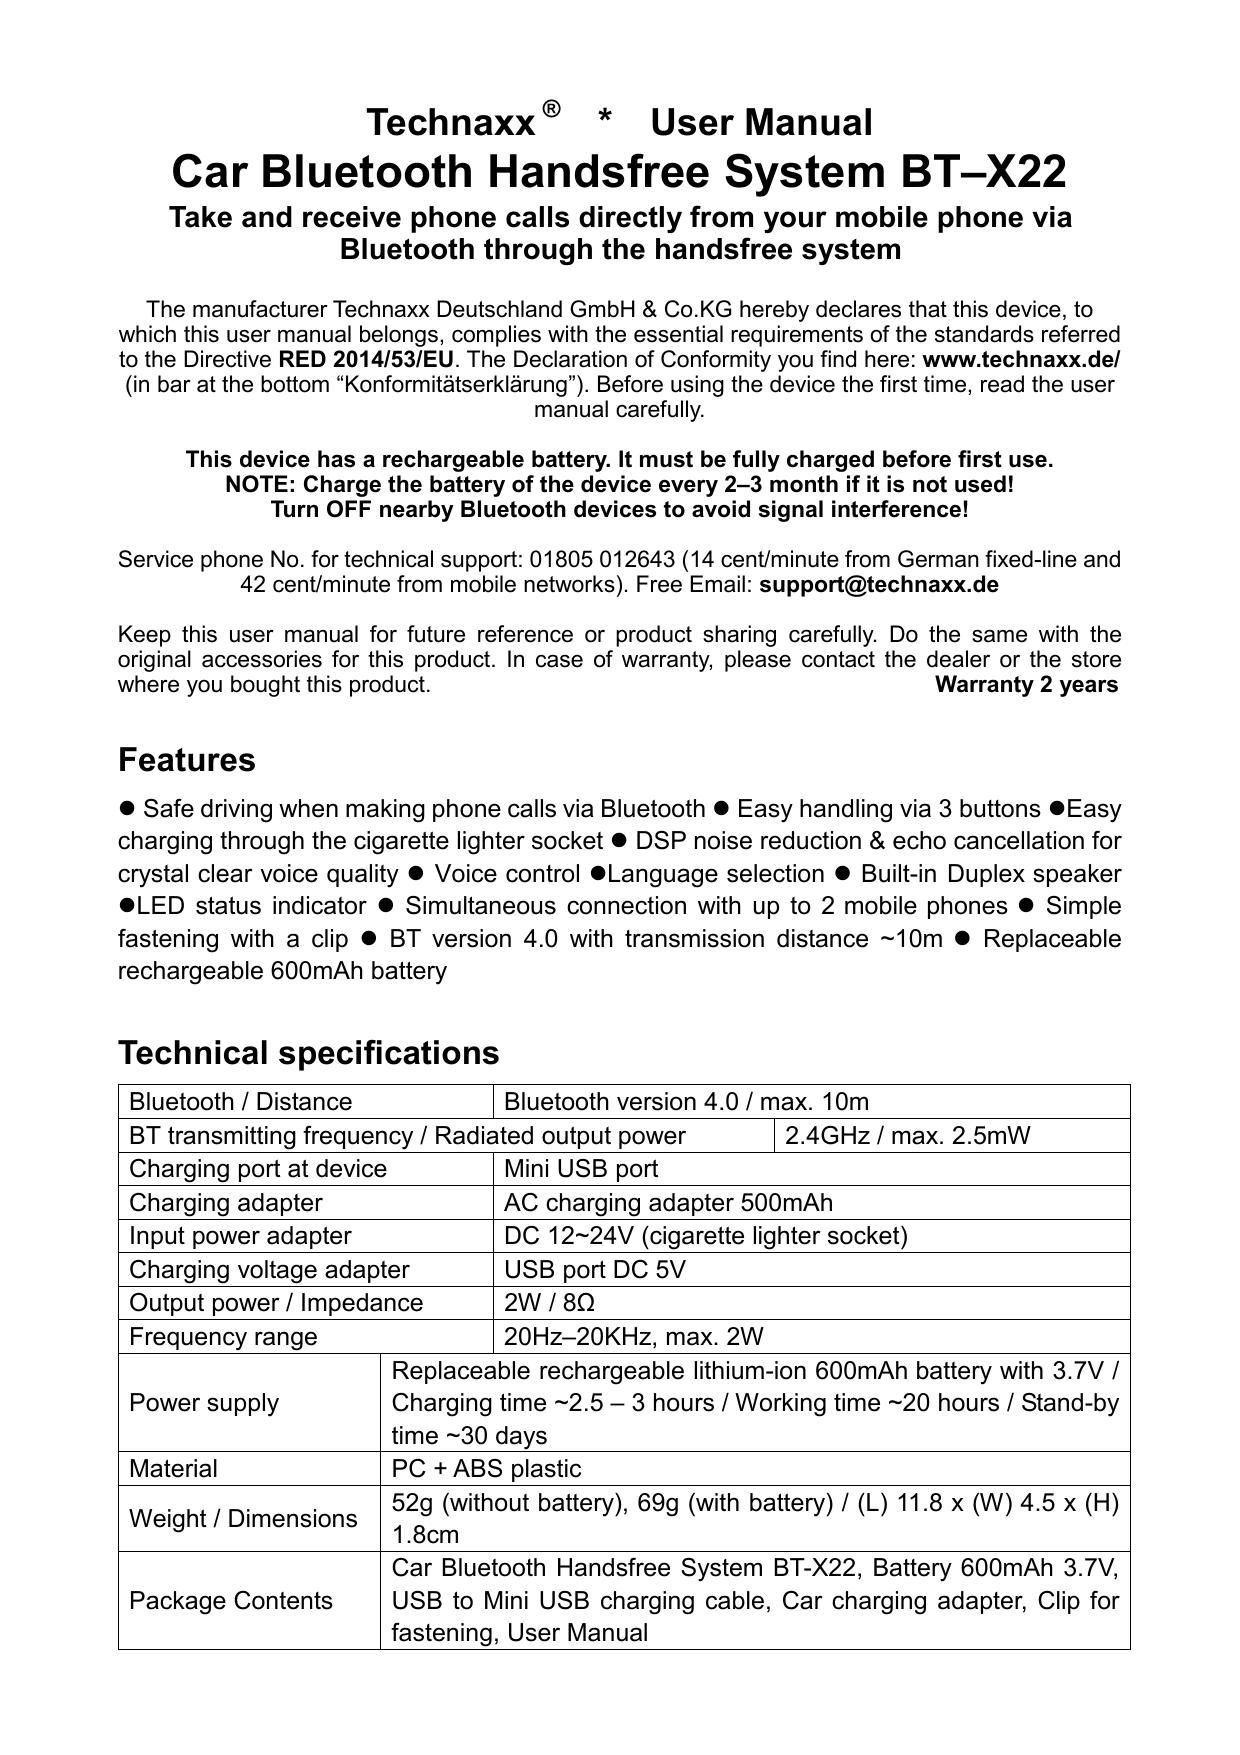 Technaxx BT-X22 Car Bluetooth System Manual | Manualzz Owner\'s Handsfree